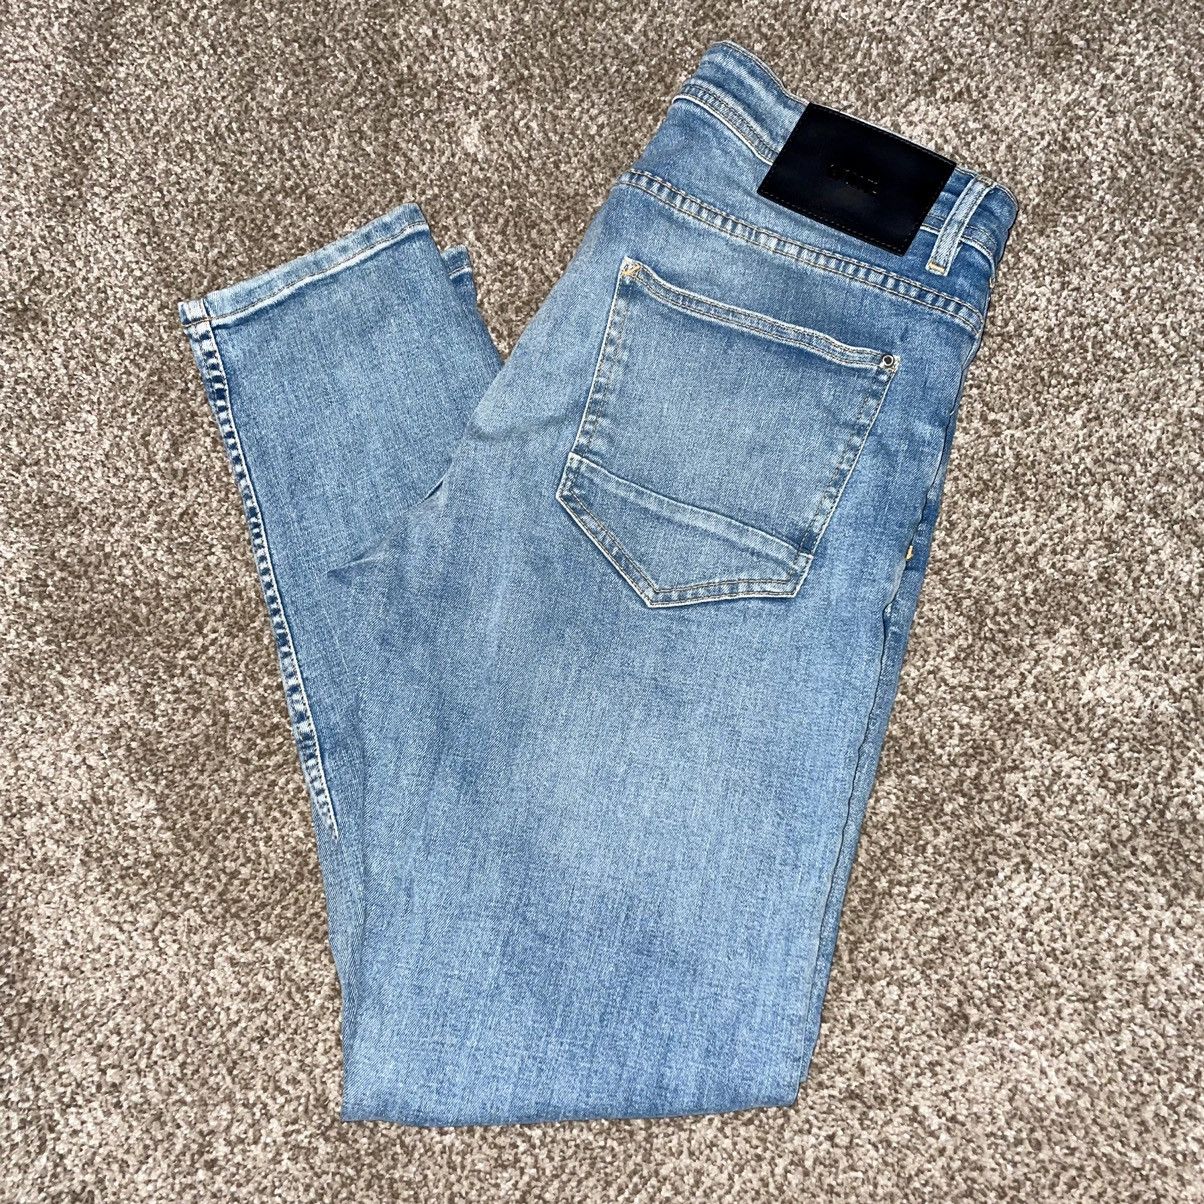 Zara ZARA MAN DENIMWEAR Blue Jeans - 36 | Grailed